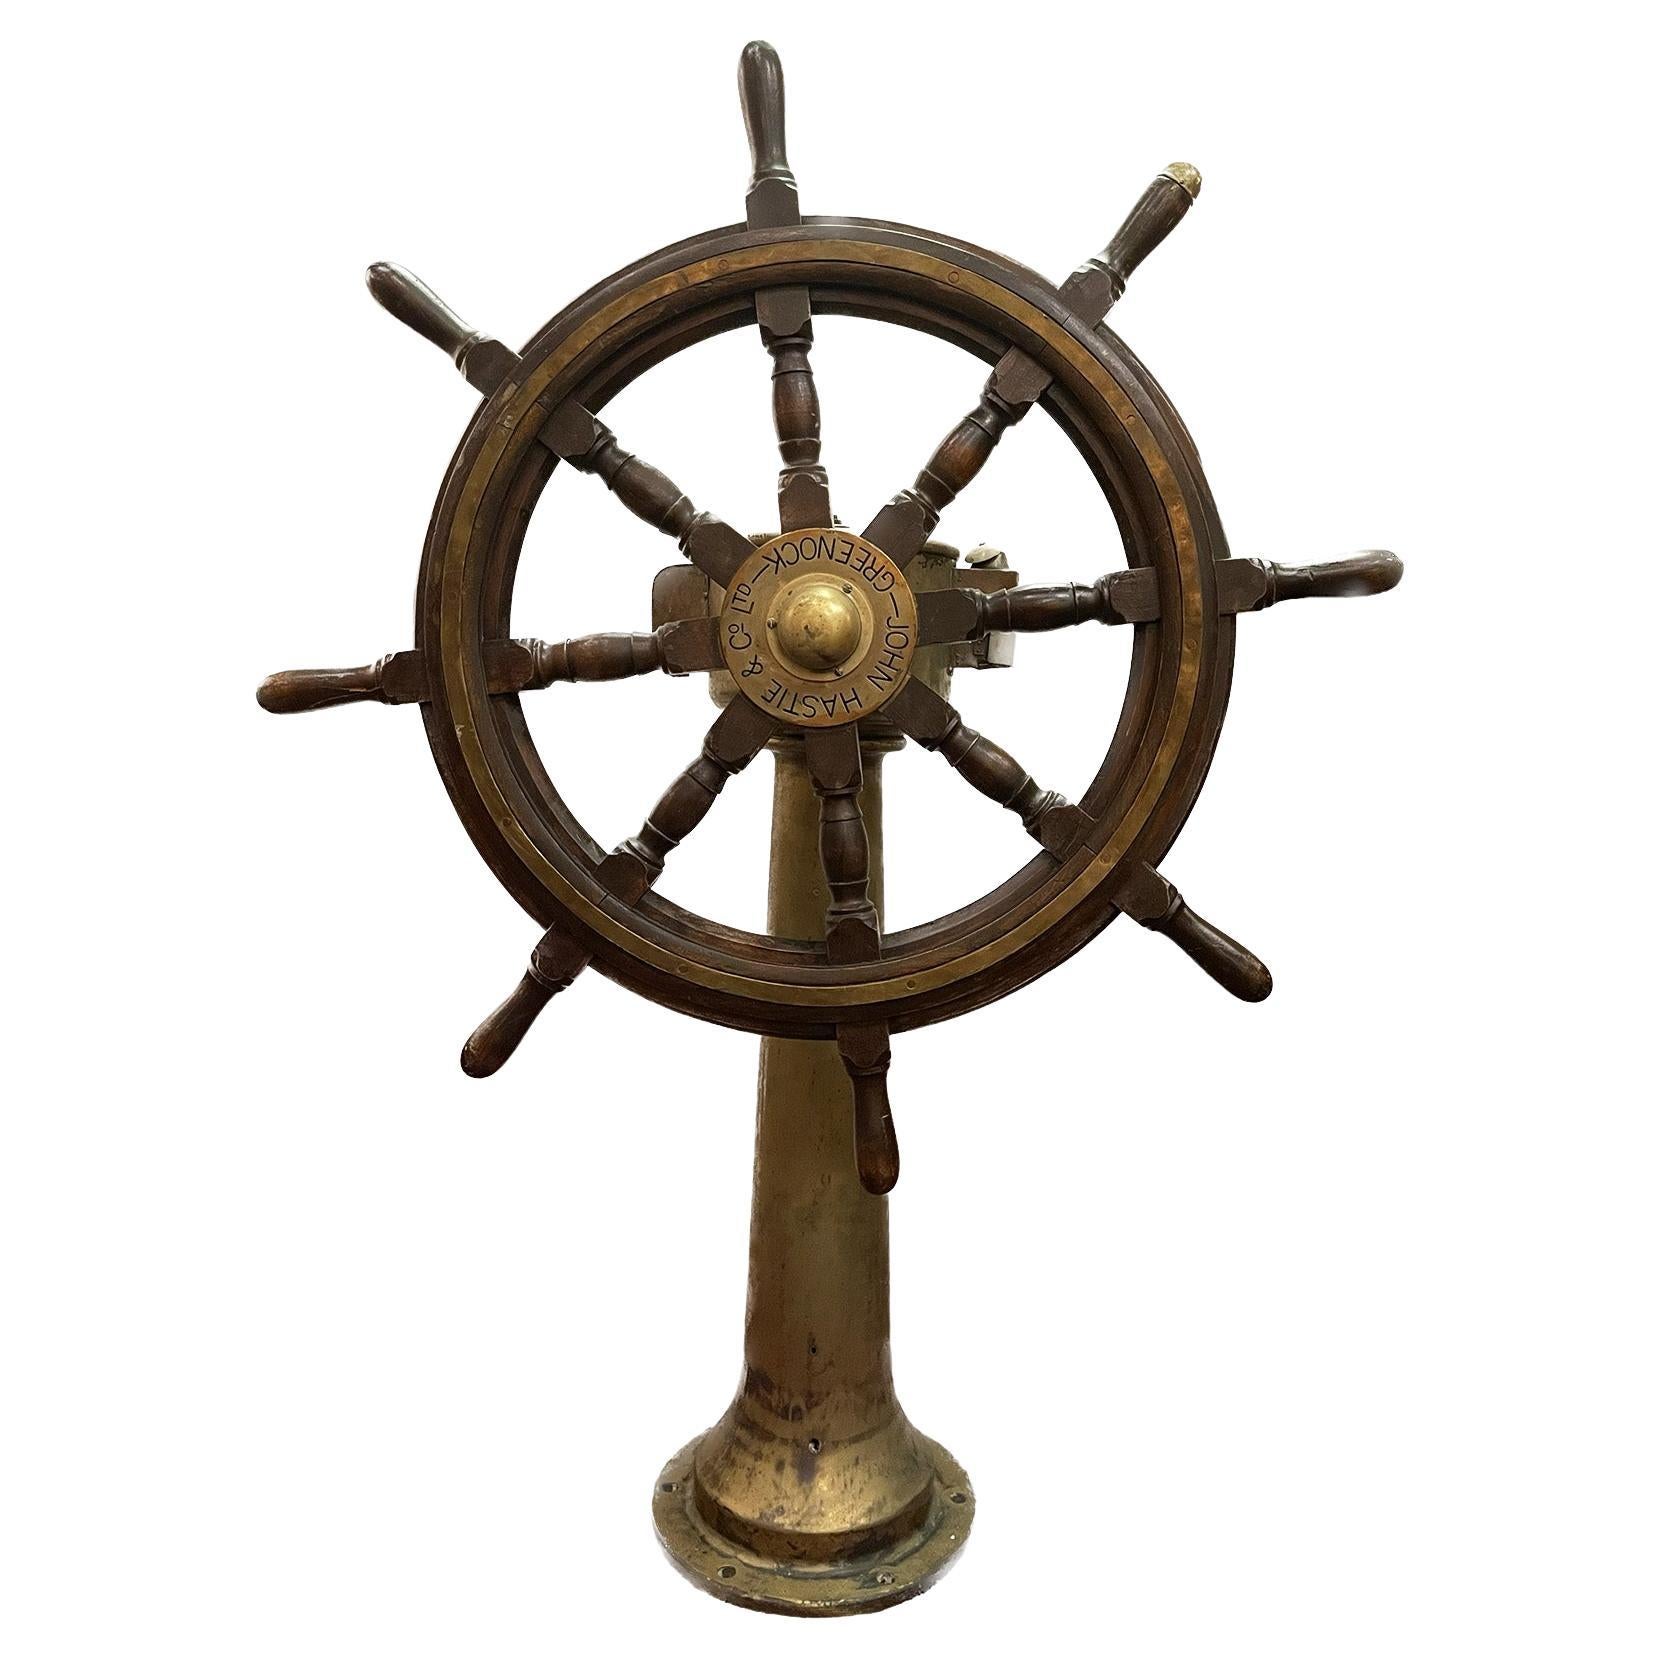 John Hastie & Co. Ltd. Greenock Ship's Wheel with Stand